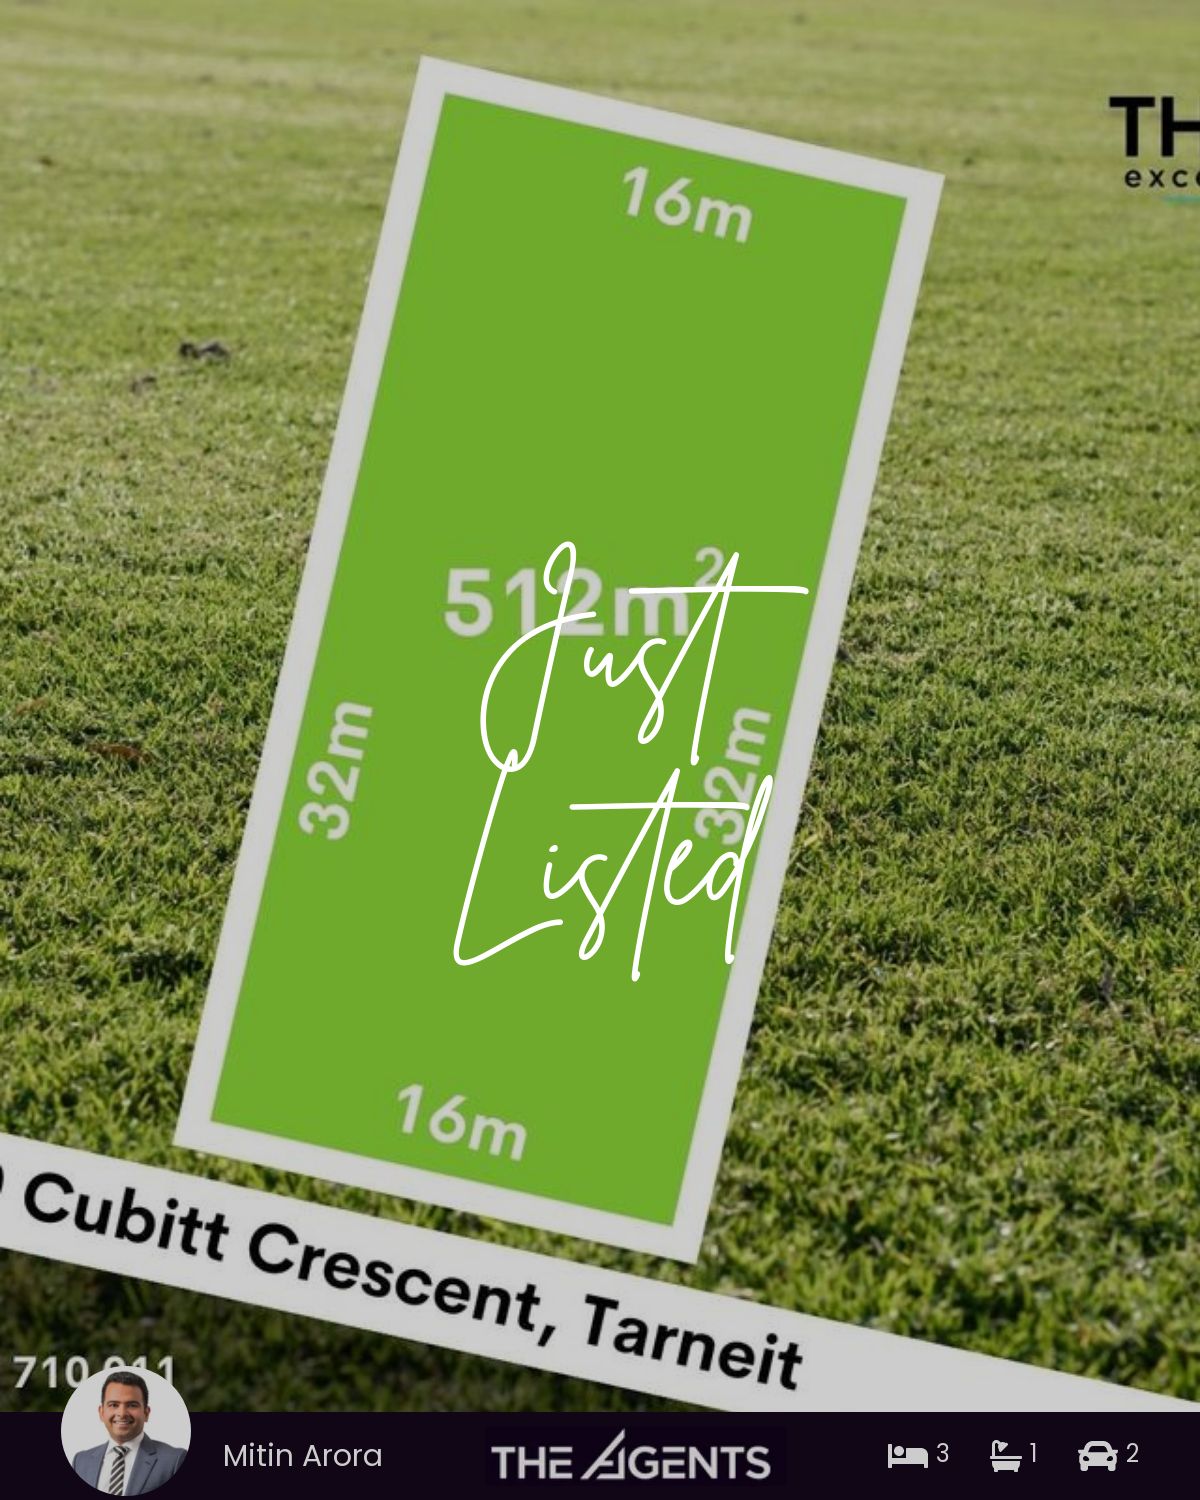 10 Cubitt Crescent, Tarneit, VIC 3029 | Realty.com.au